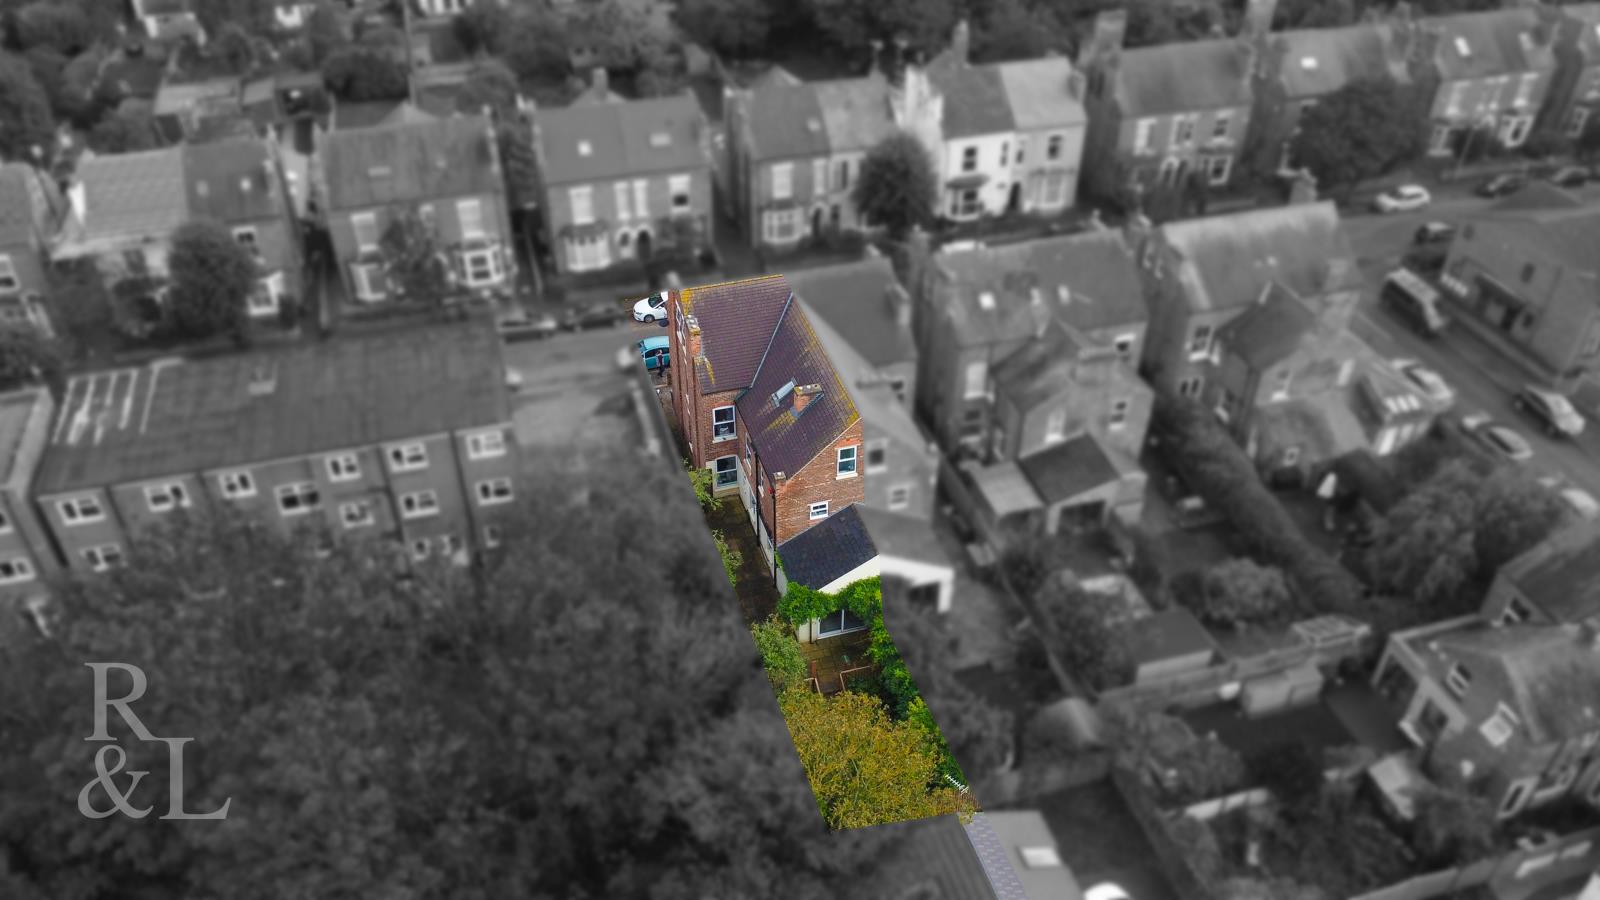 Property image for North Road, West Bridgford, Nottingham